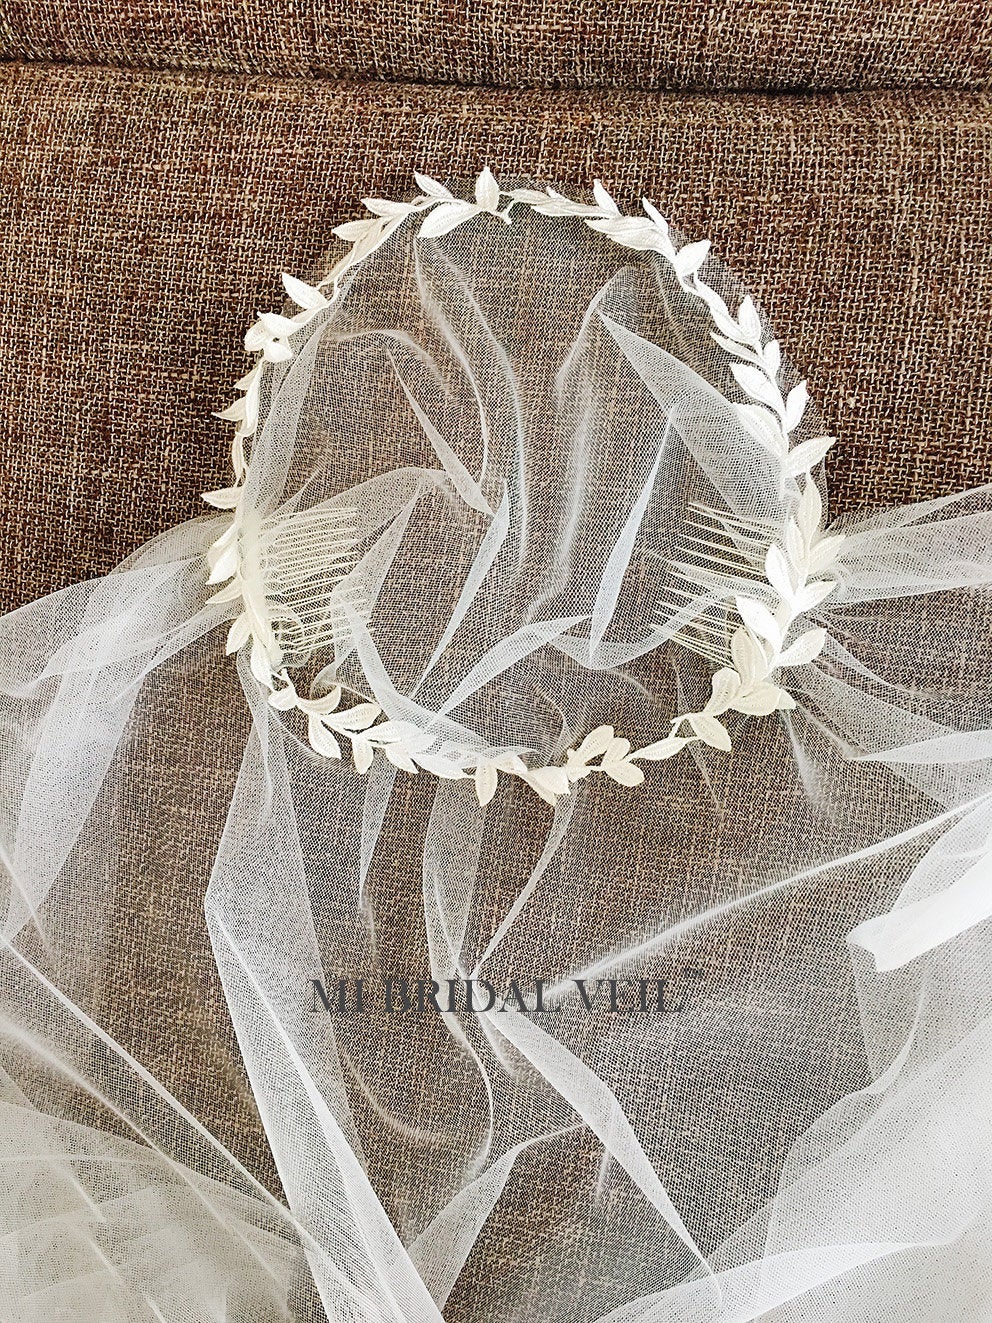 Juliet Cap Veil, 1920s Inspired Bridal Wedding Veil, Mi Bridal